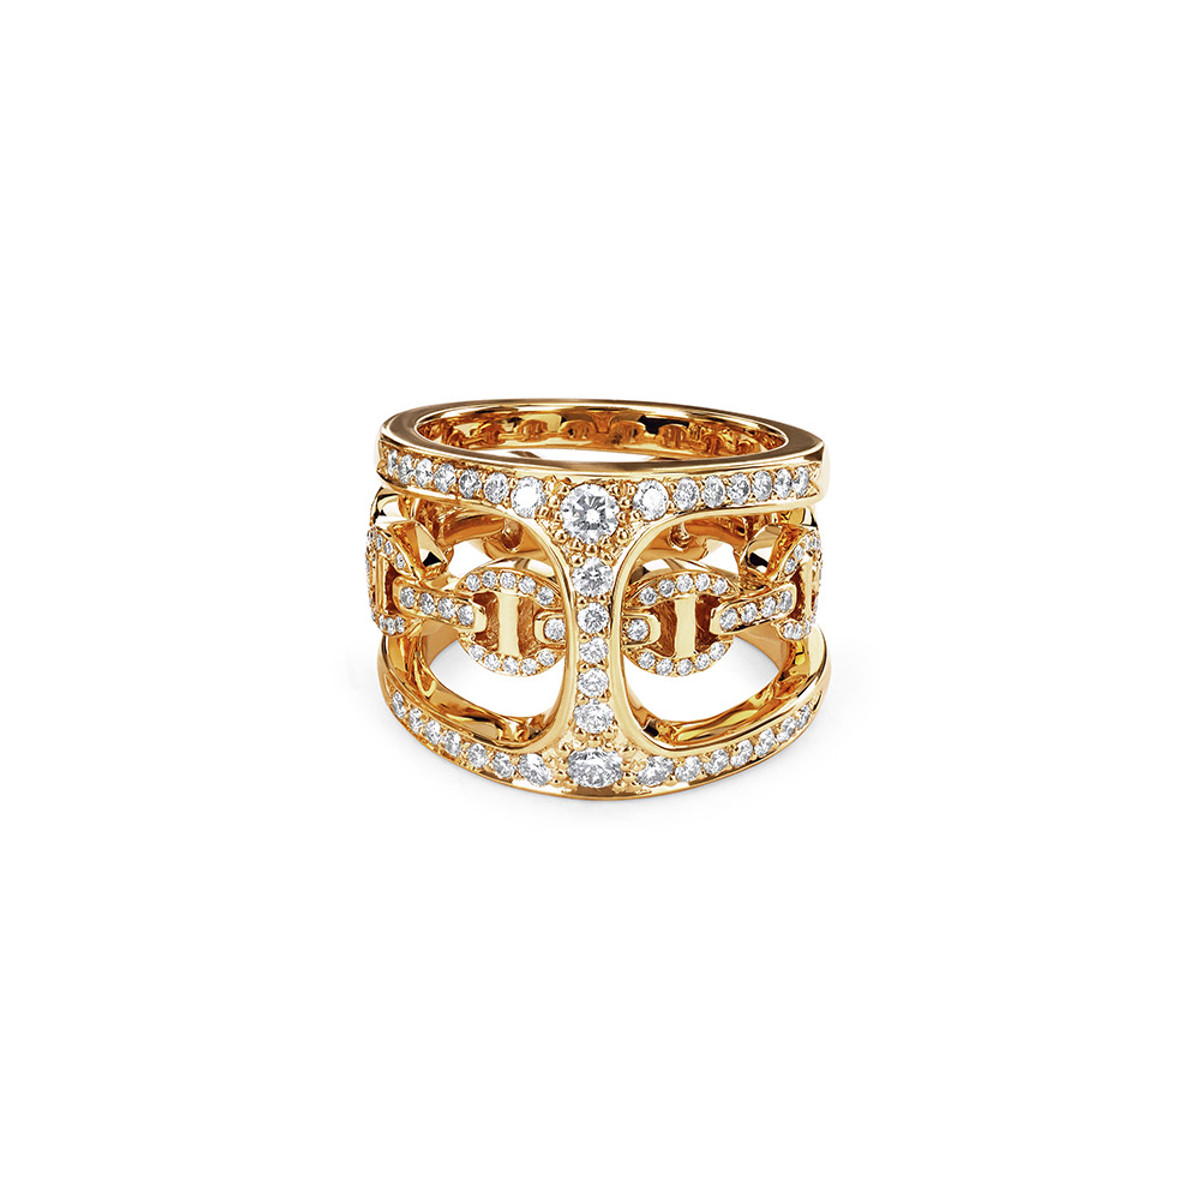 Hoorsenbuhs 18K Yellow Gold Phantom Clique Diamond Antiquated Tri-Link Ring-57488 Product Image